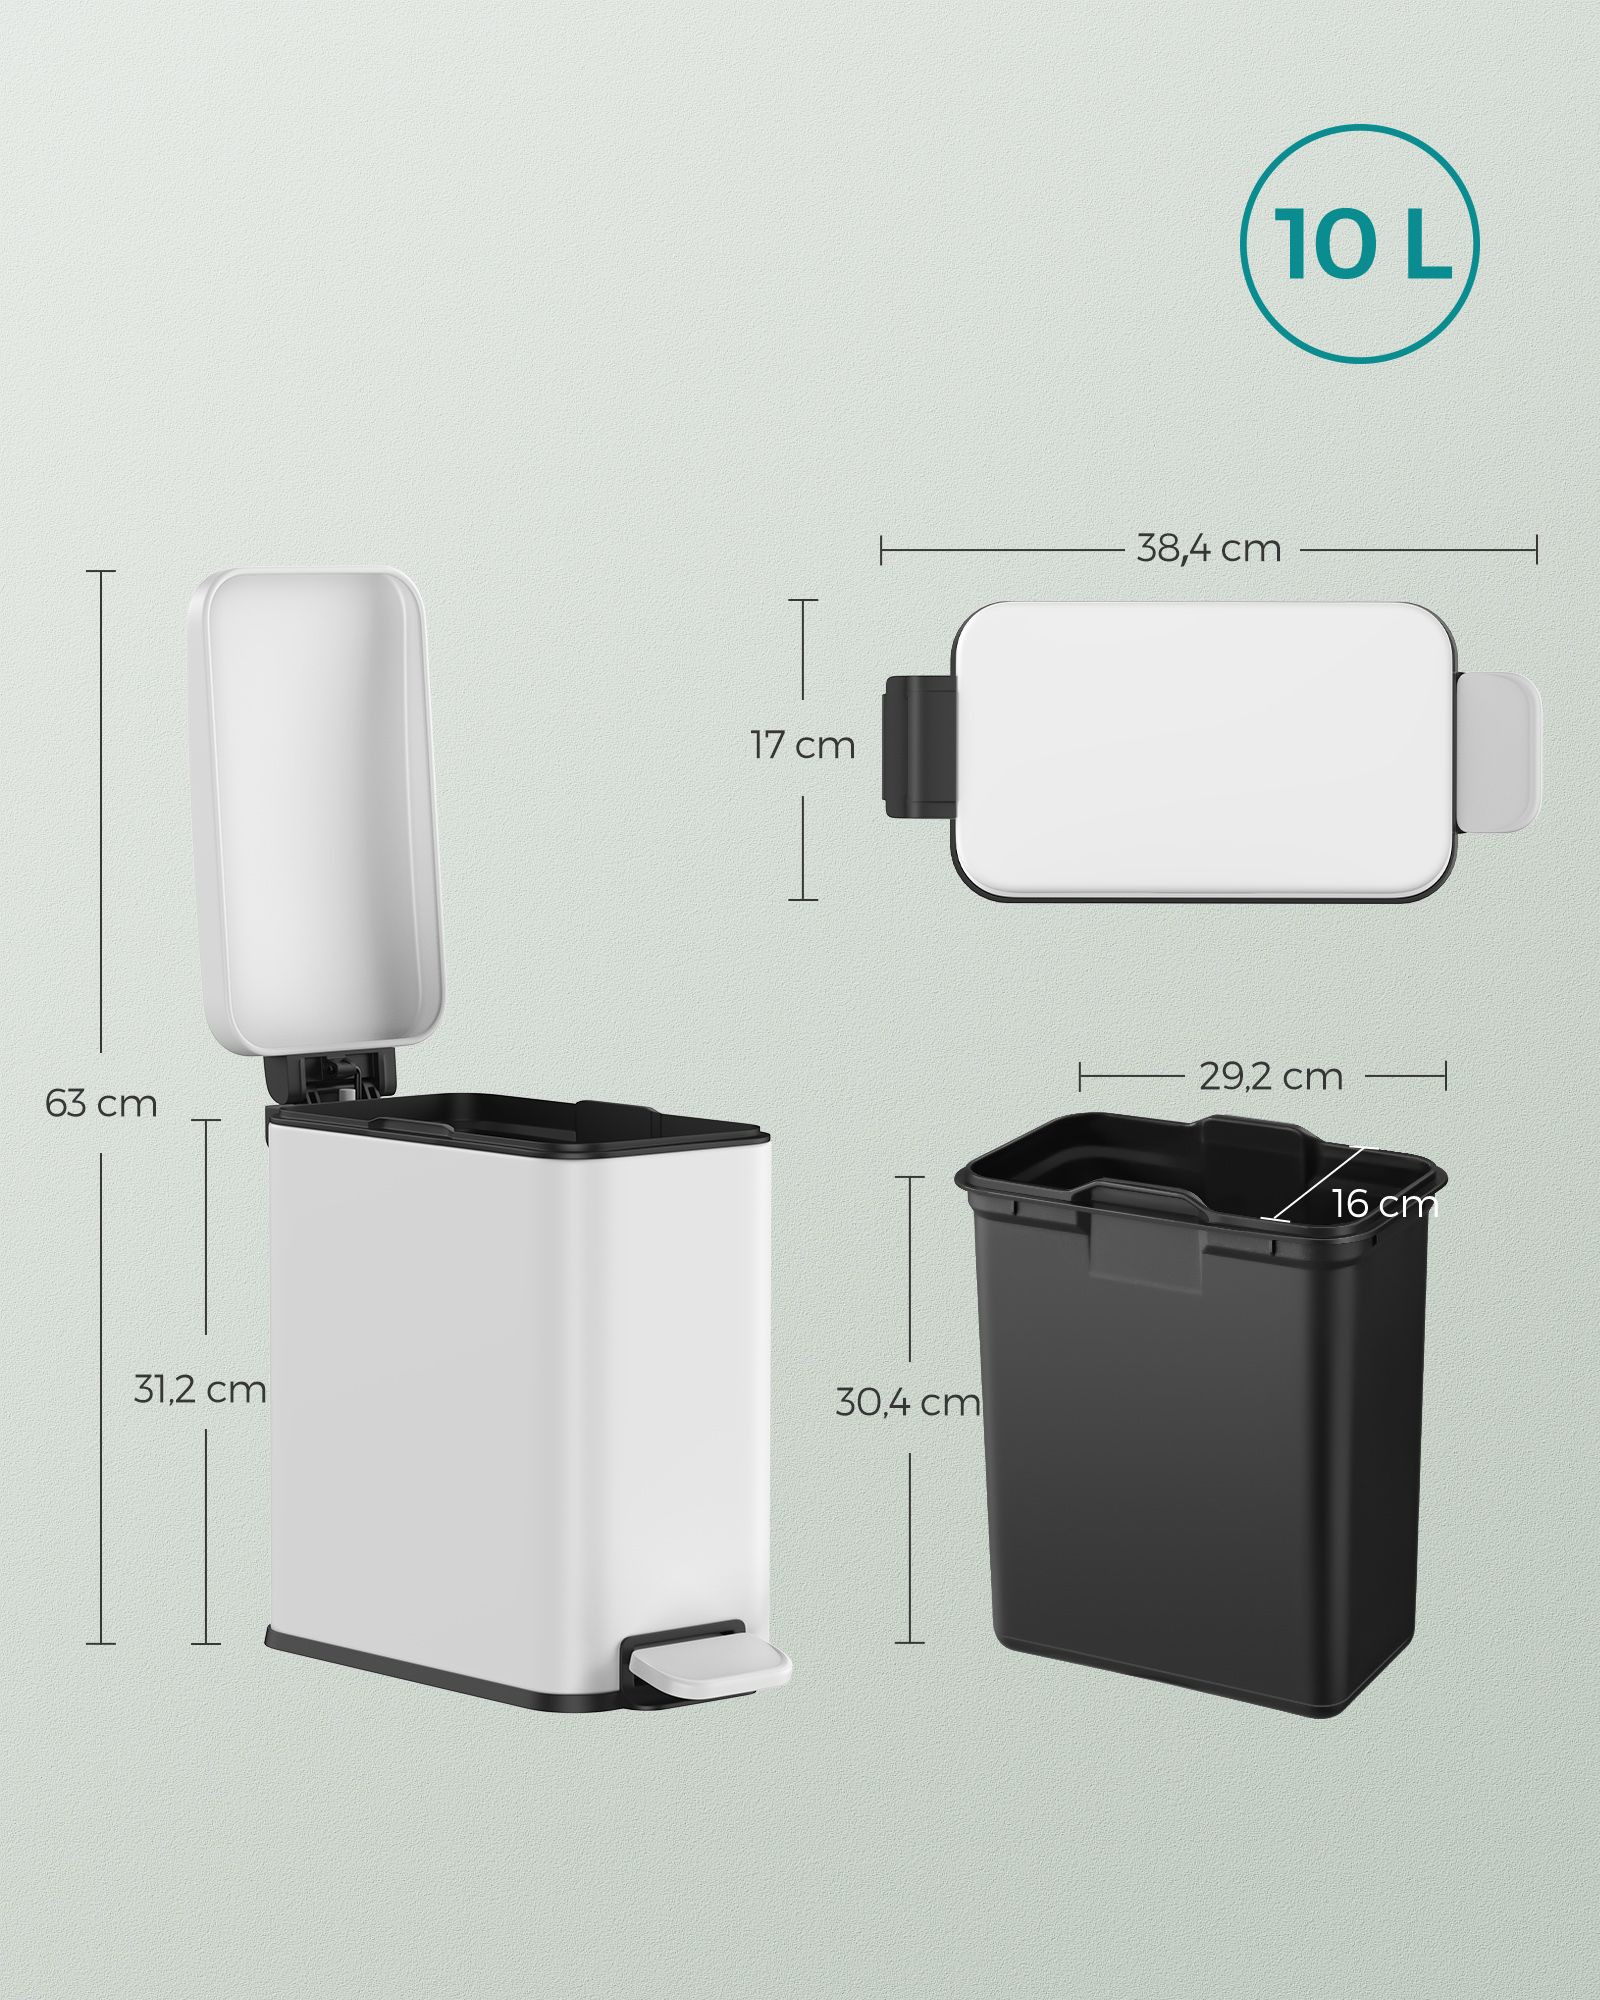 Odpadkový kôš 10 l LTB561W10